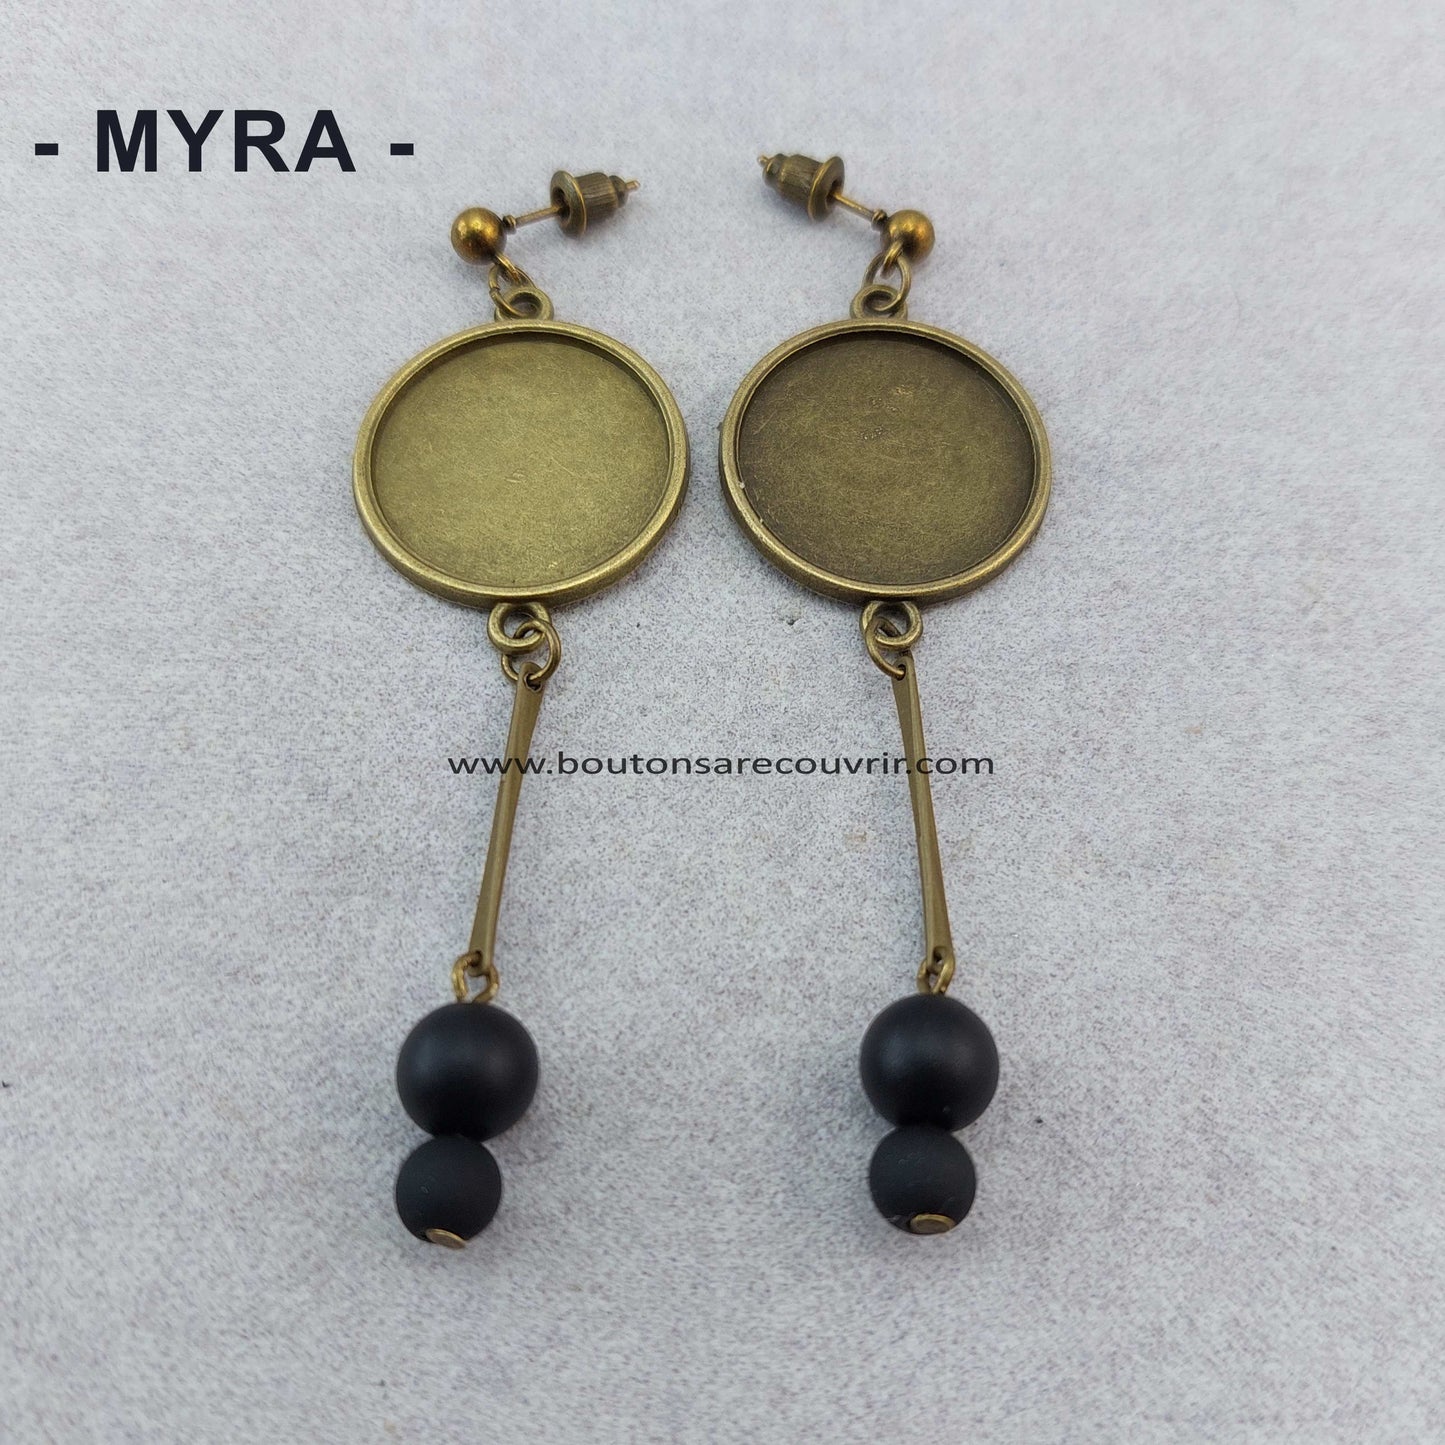 MYRA | Boucles d'oreilles à recouvrir